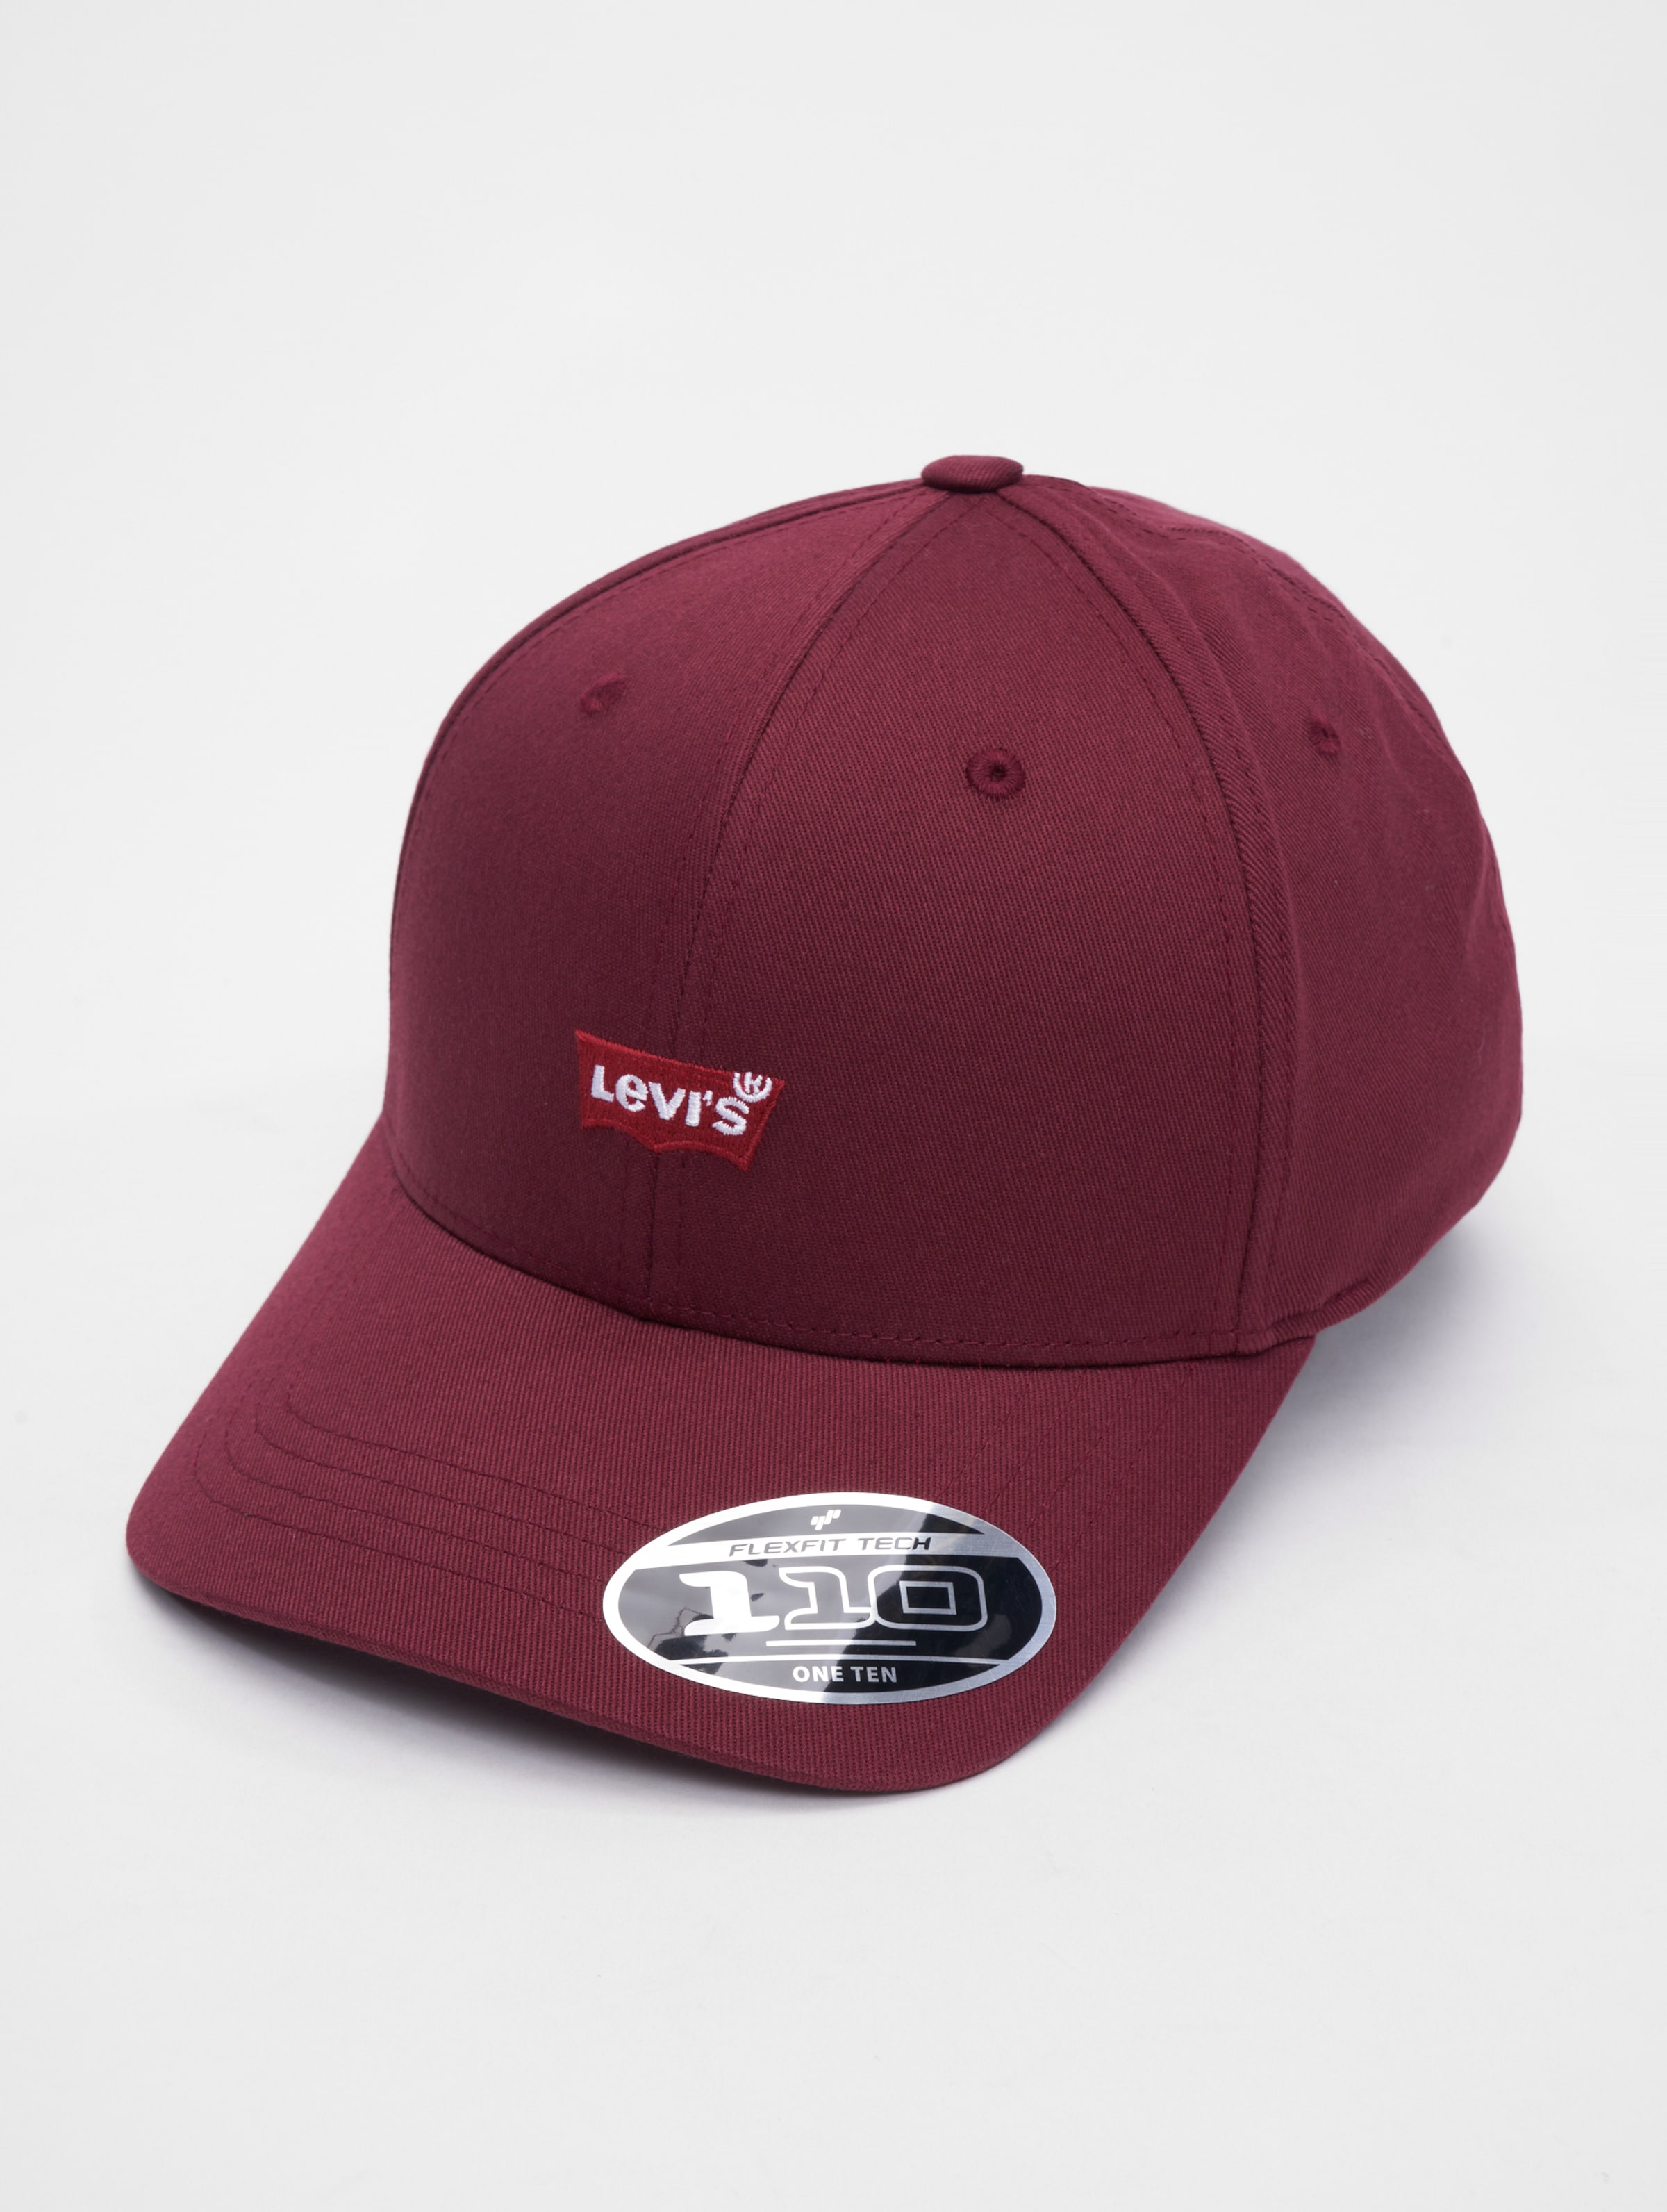 Levi's Housemark Flexfit Snapback Caps Frauen,Männer,Unisex op kleur rood, Maat ADJUSTABLE